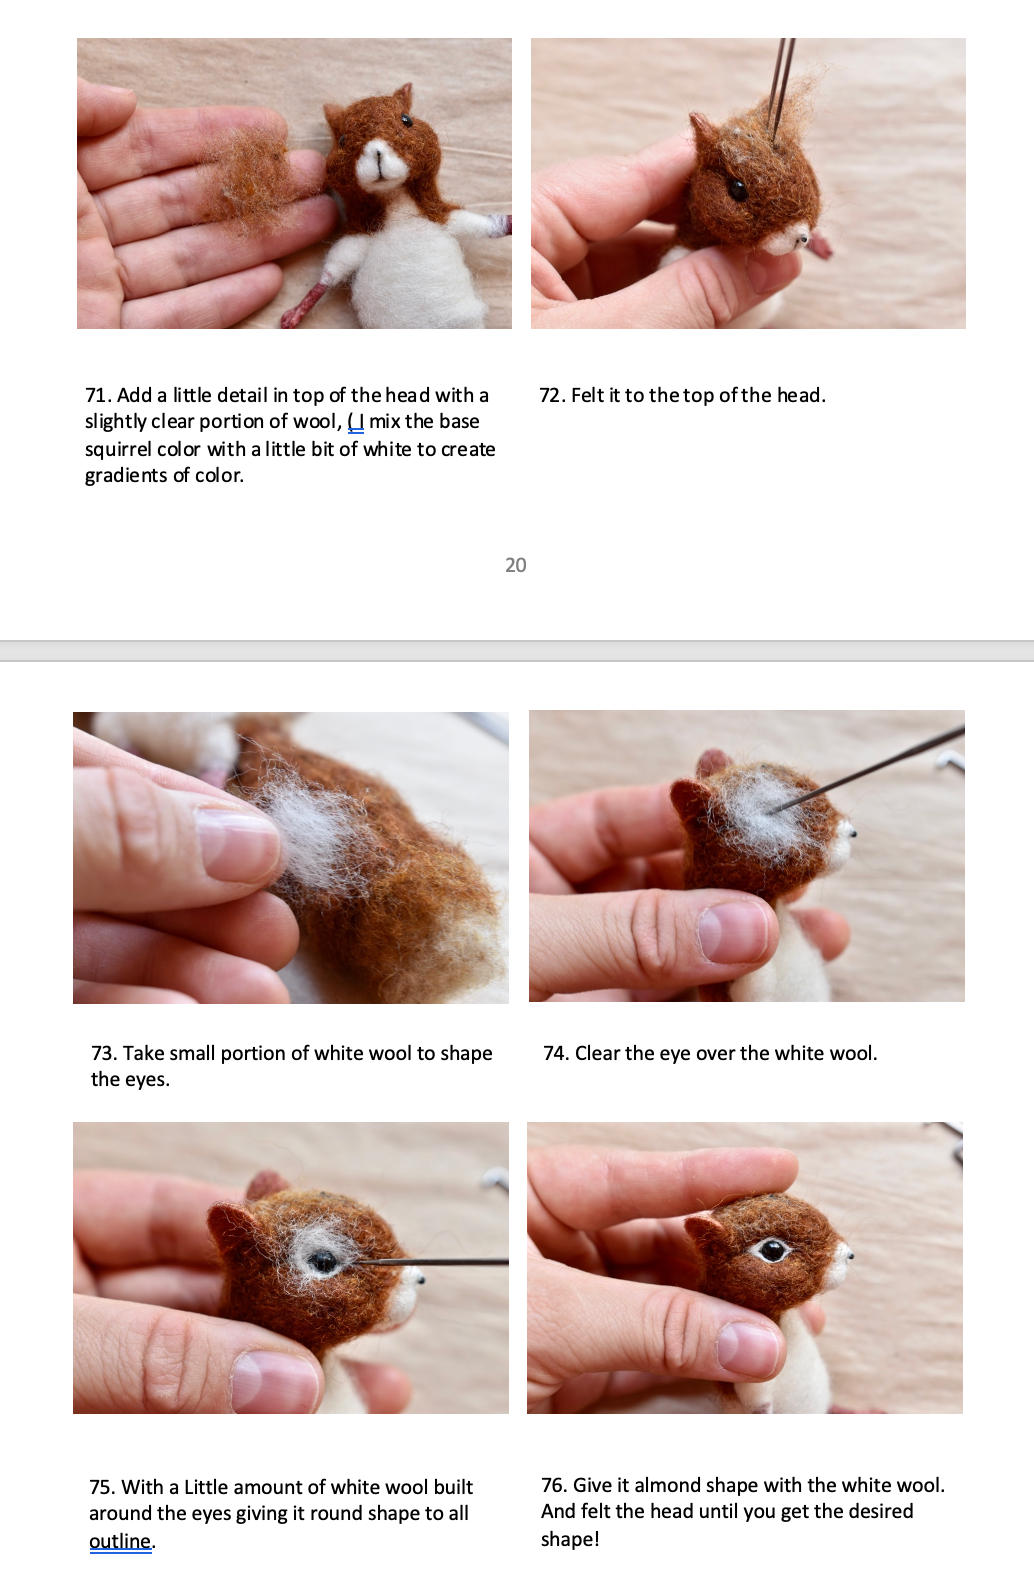 Little Squirrel - Needle Felting PDF DIGITAL PATTERN